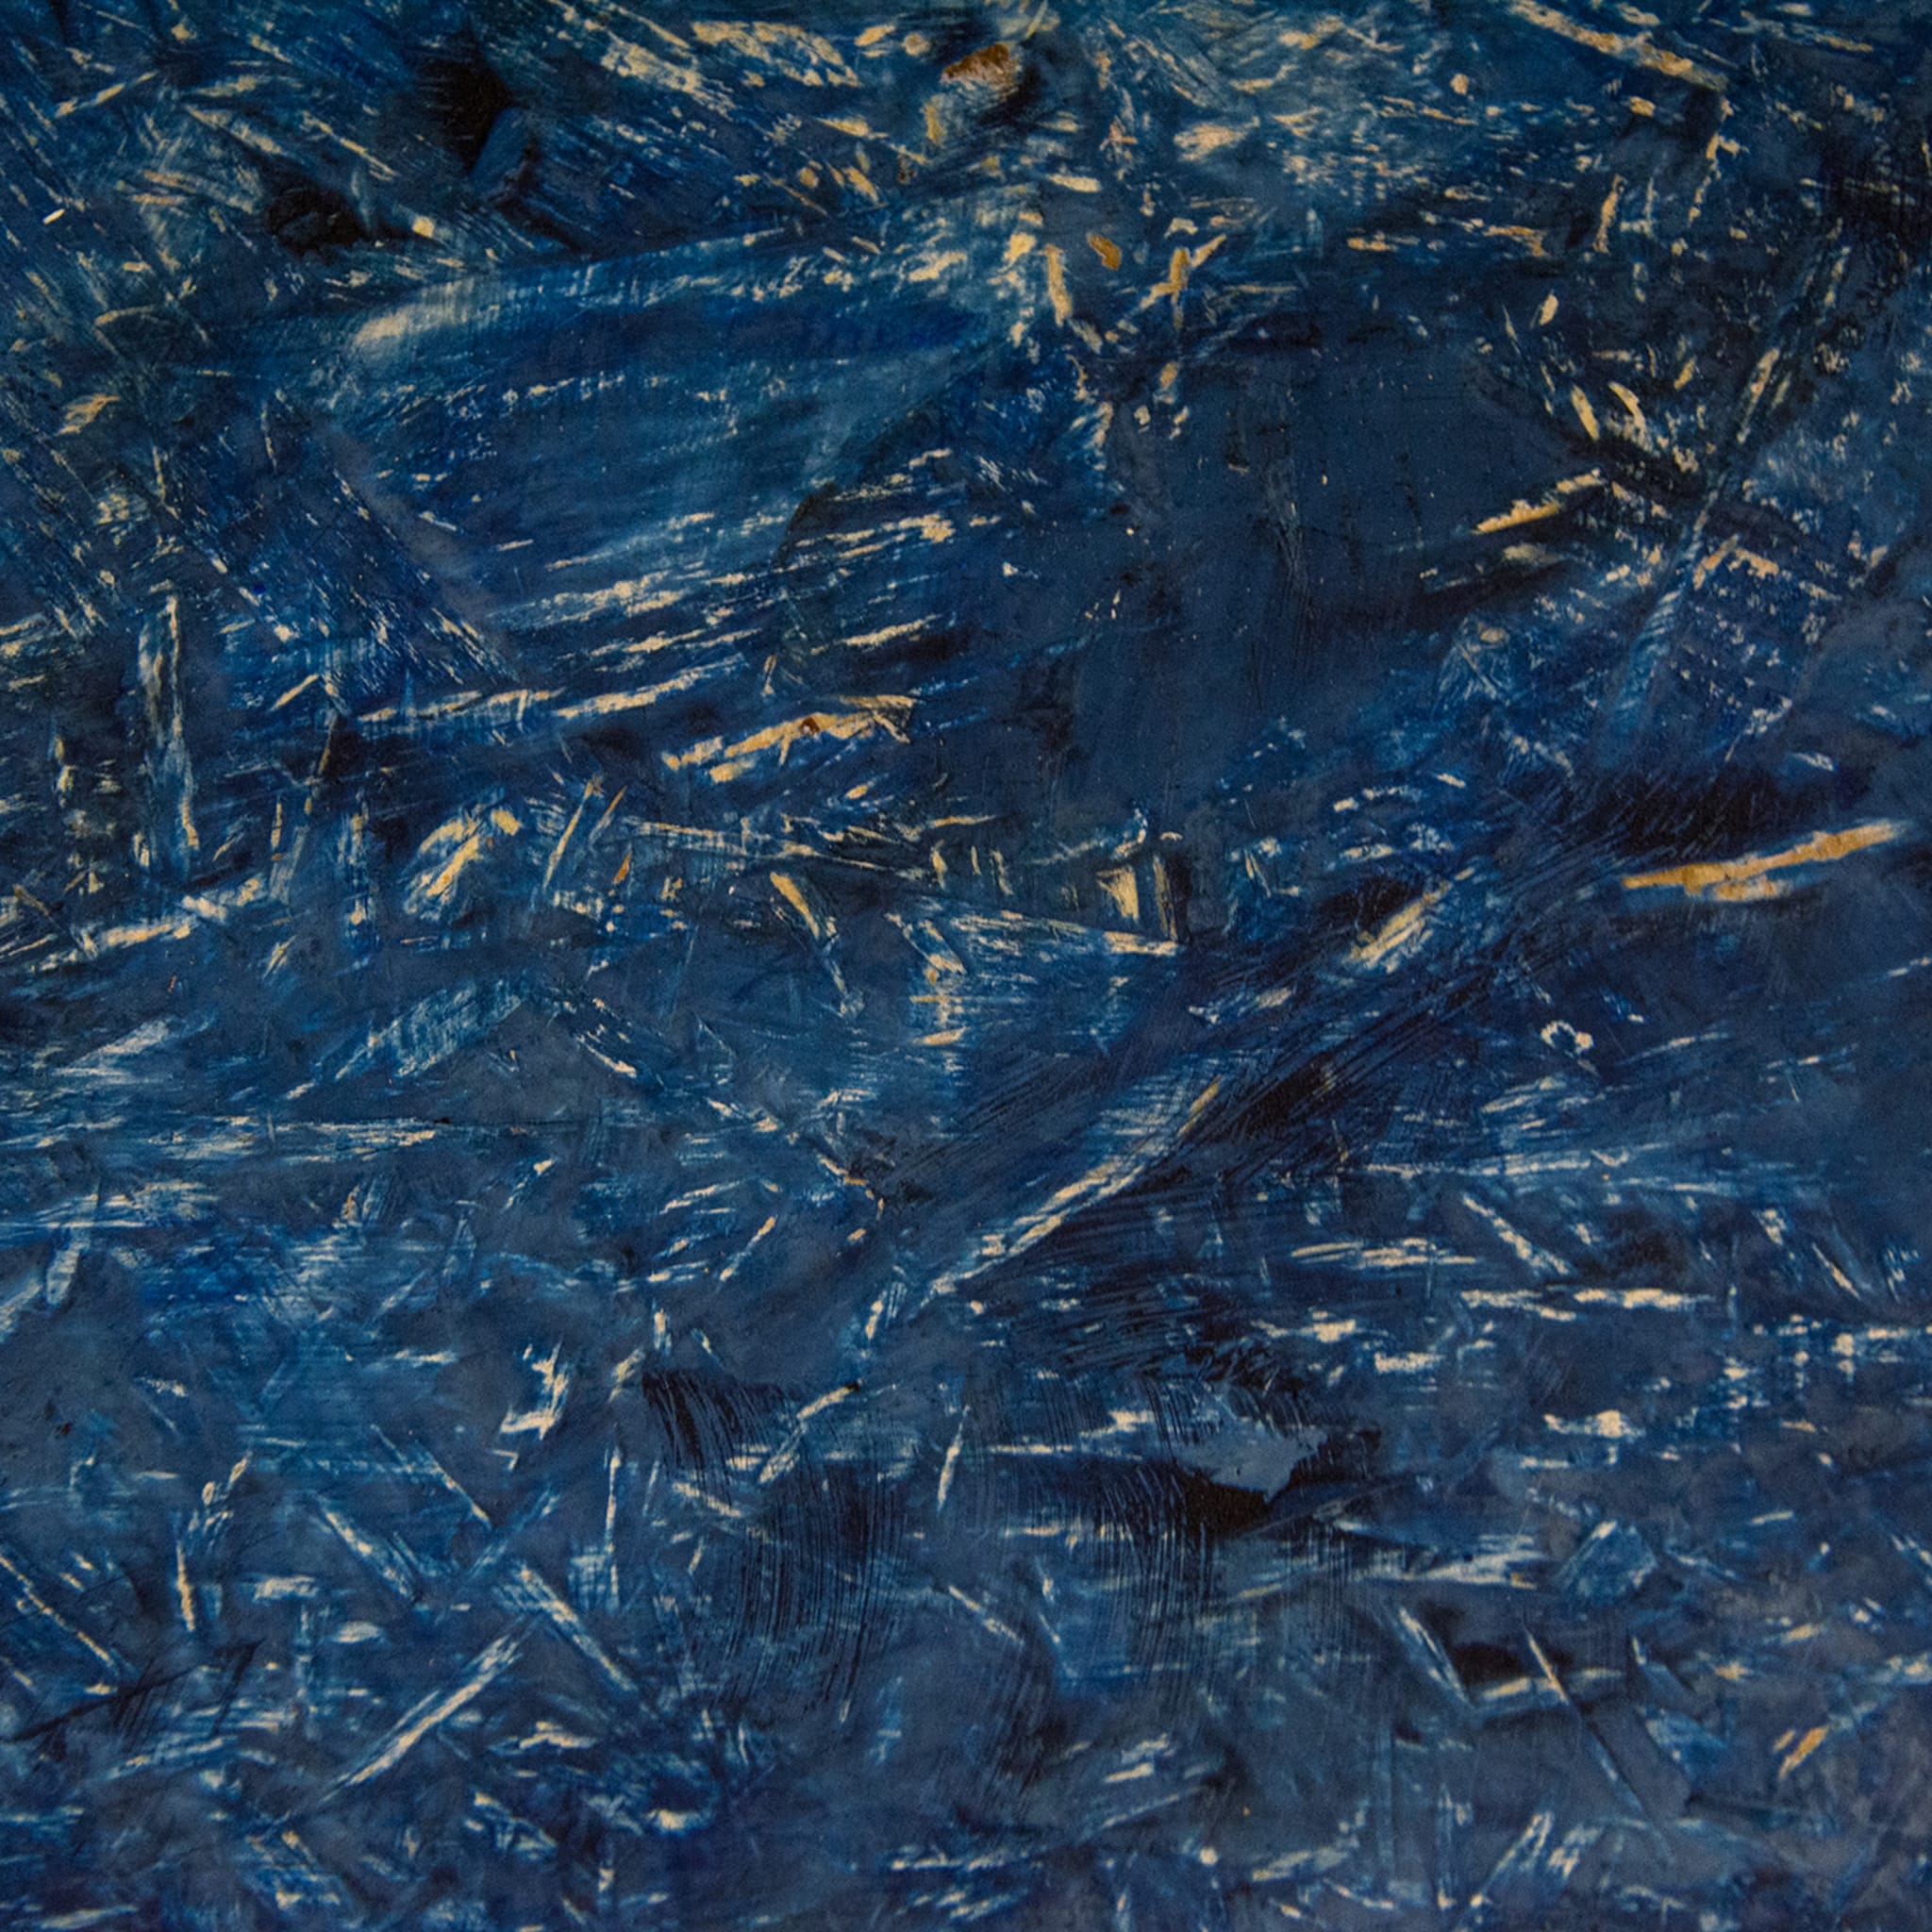 Corallo Blu Painting - Alternative view 1